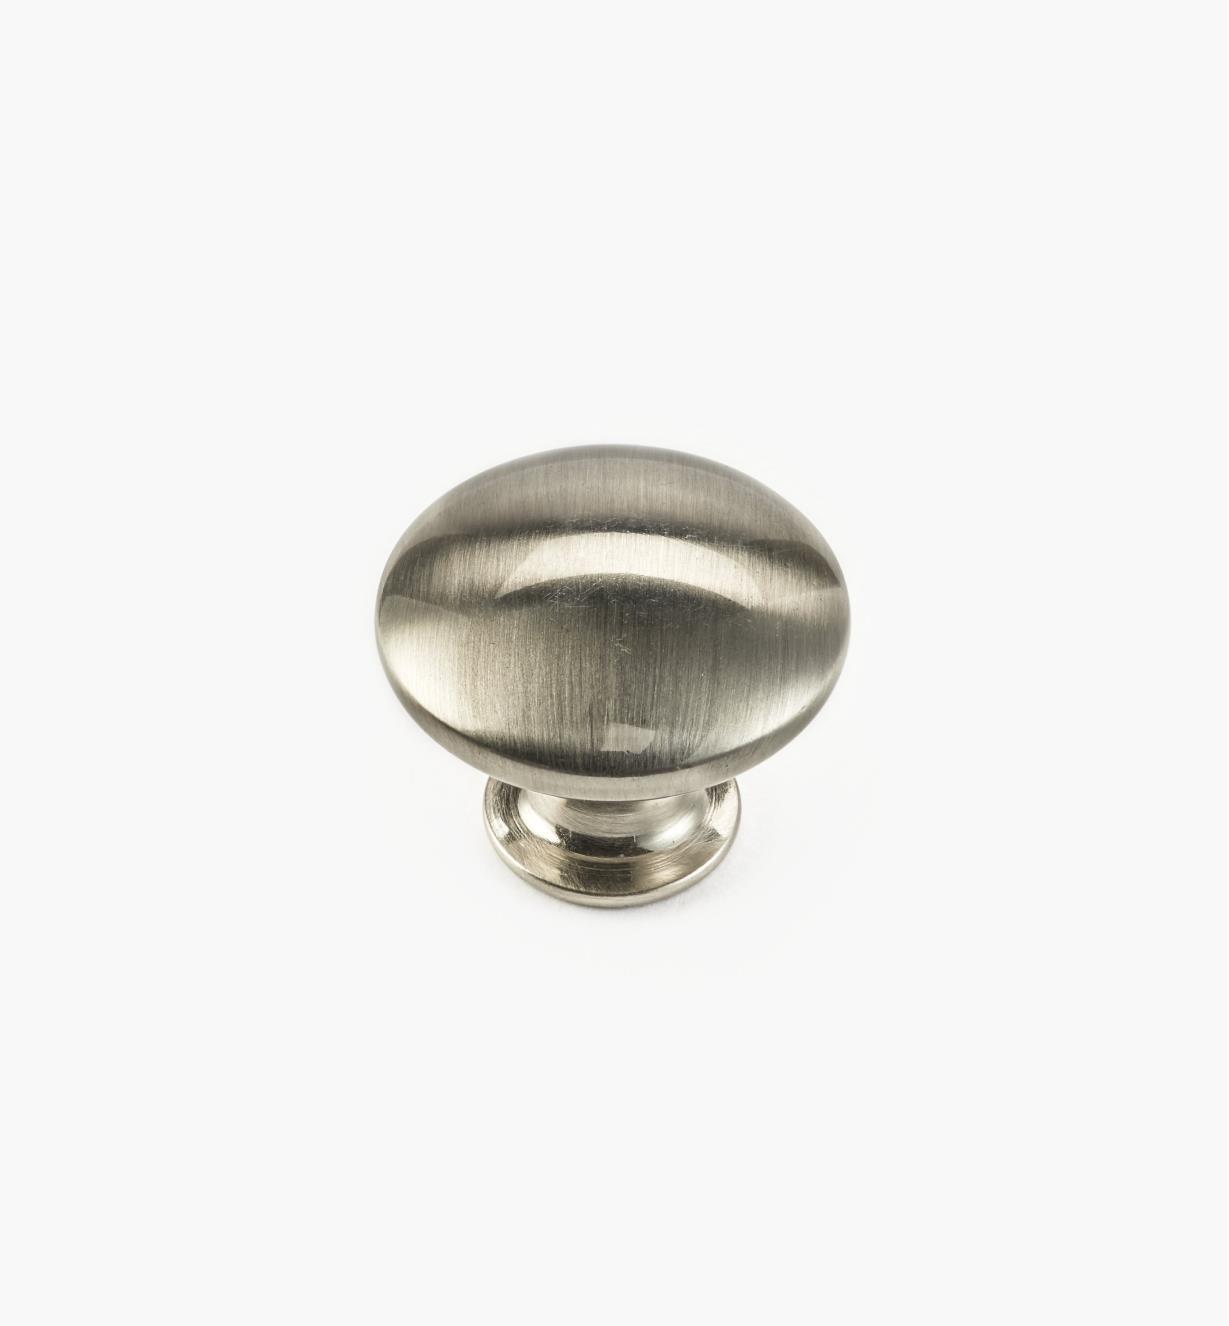 02W4285 - 1" x 3/4" Brushed Nickel Knob